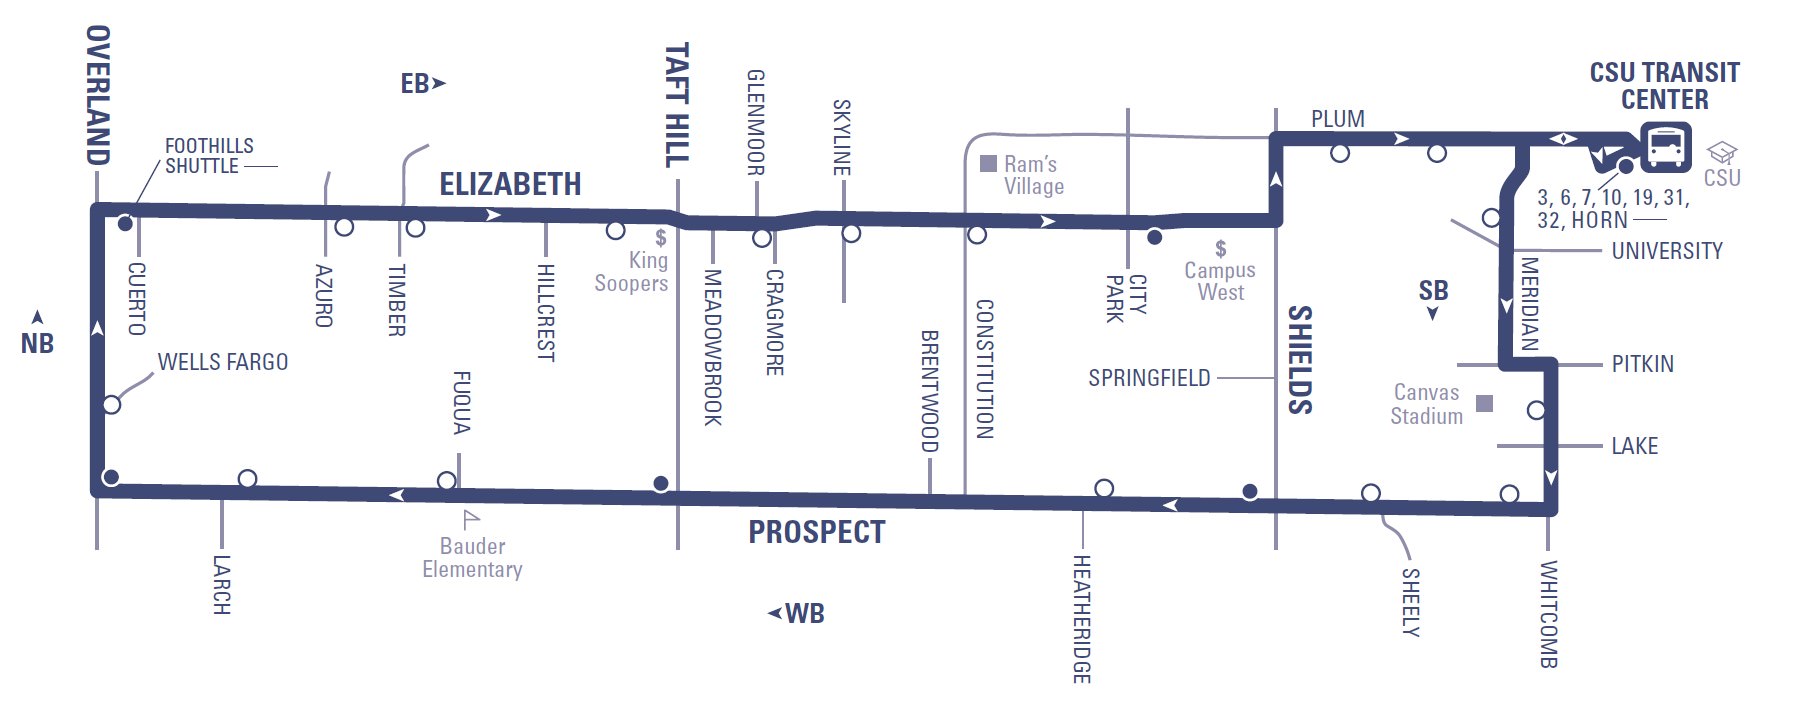 Route 2 - CSU Transit Center to Overland (Loop) via Prospect (westbound) returning via Elizabeth and Plum (eastbound)